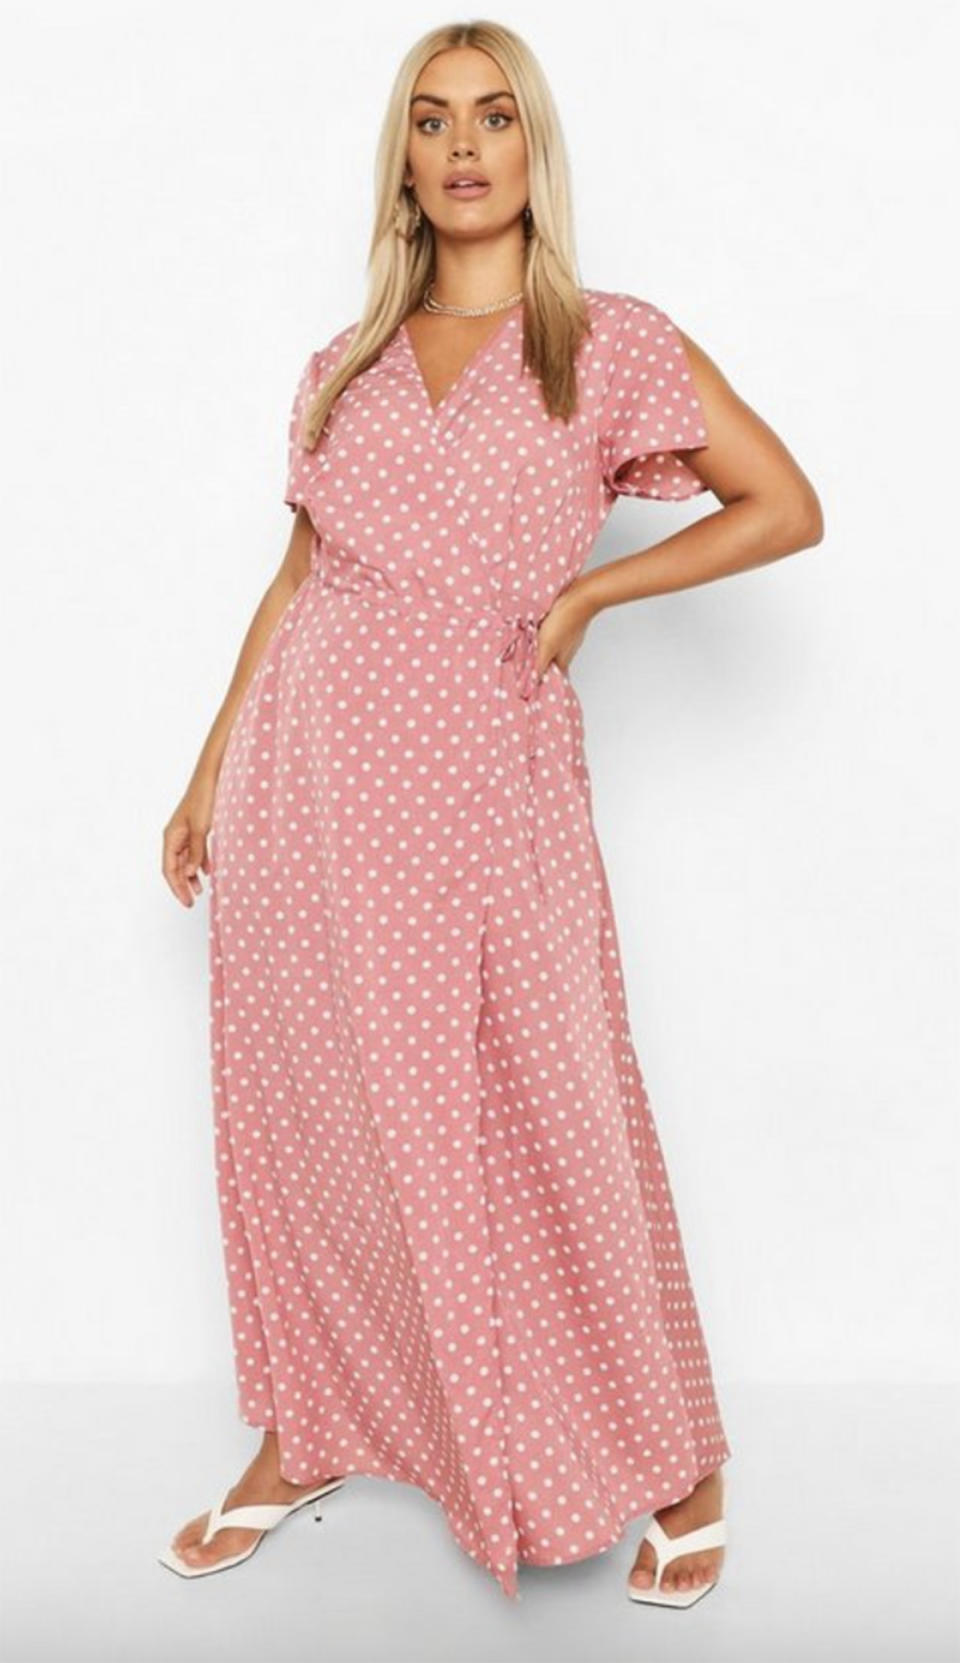 Boohoo Plus Polka Dot Wrap Maxi Dress, $32.50. Photo: Boohoo.